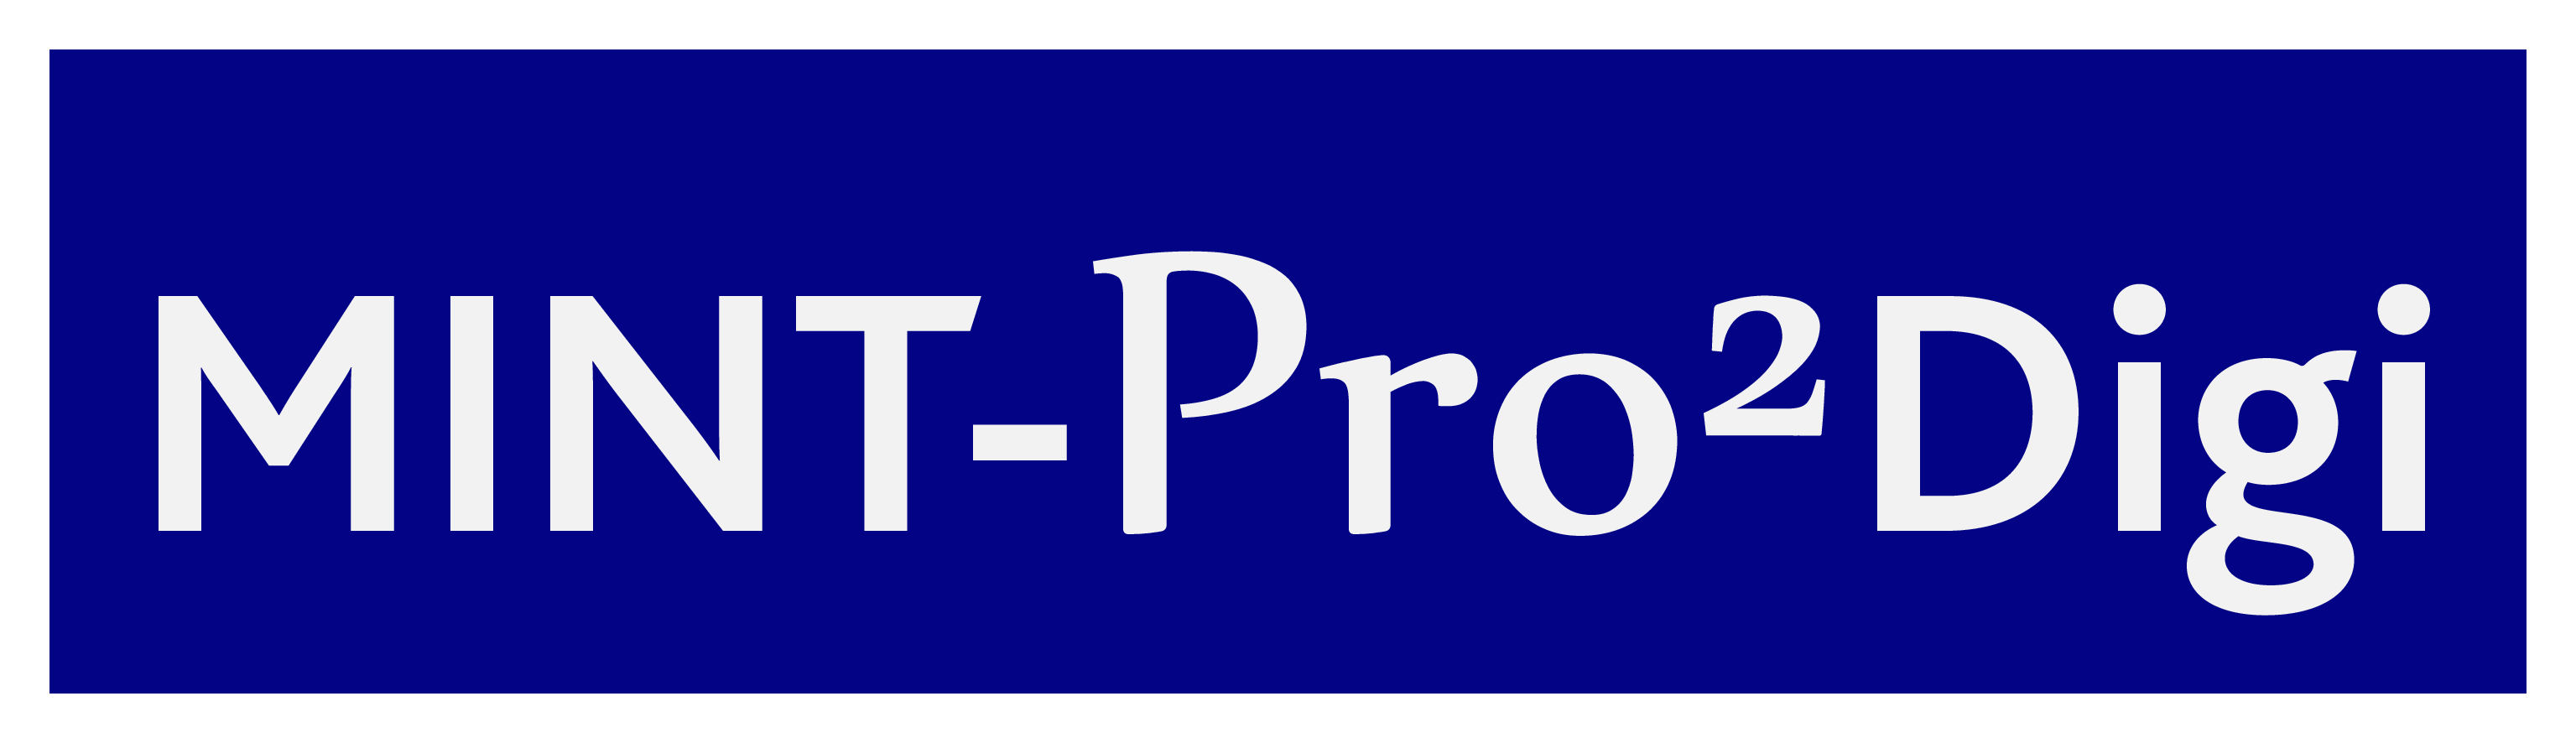 MINT-Pro²Digi Logo